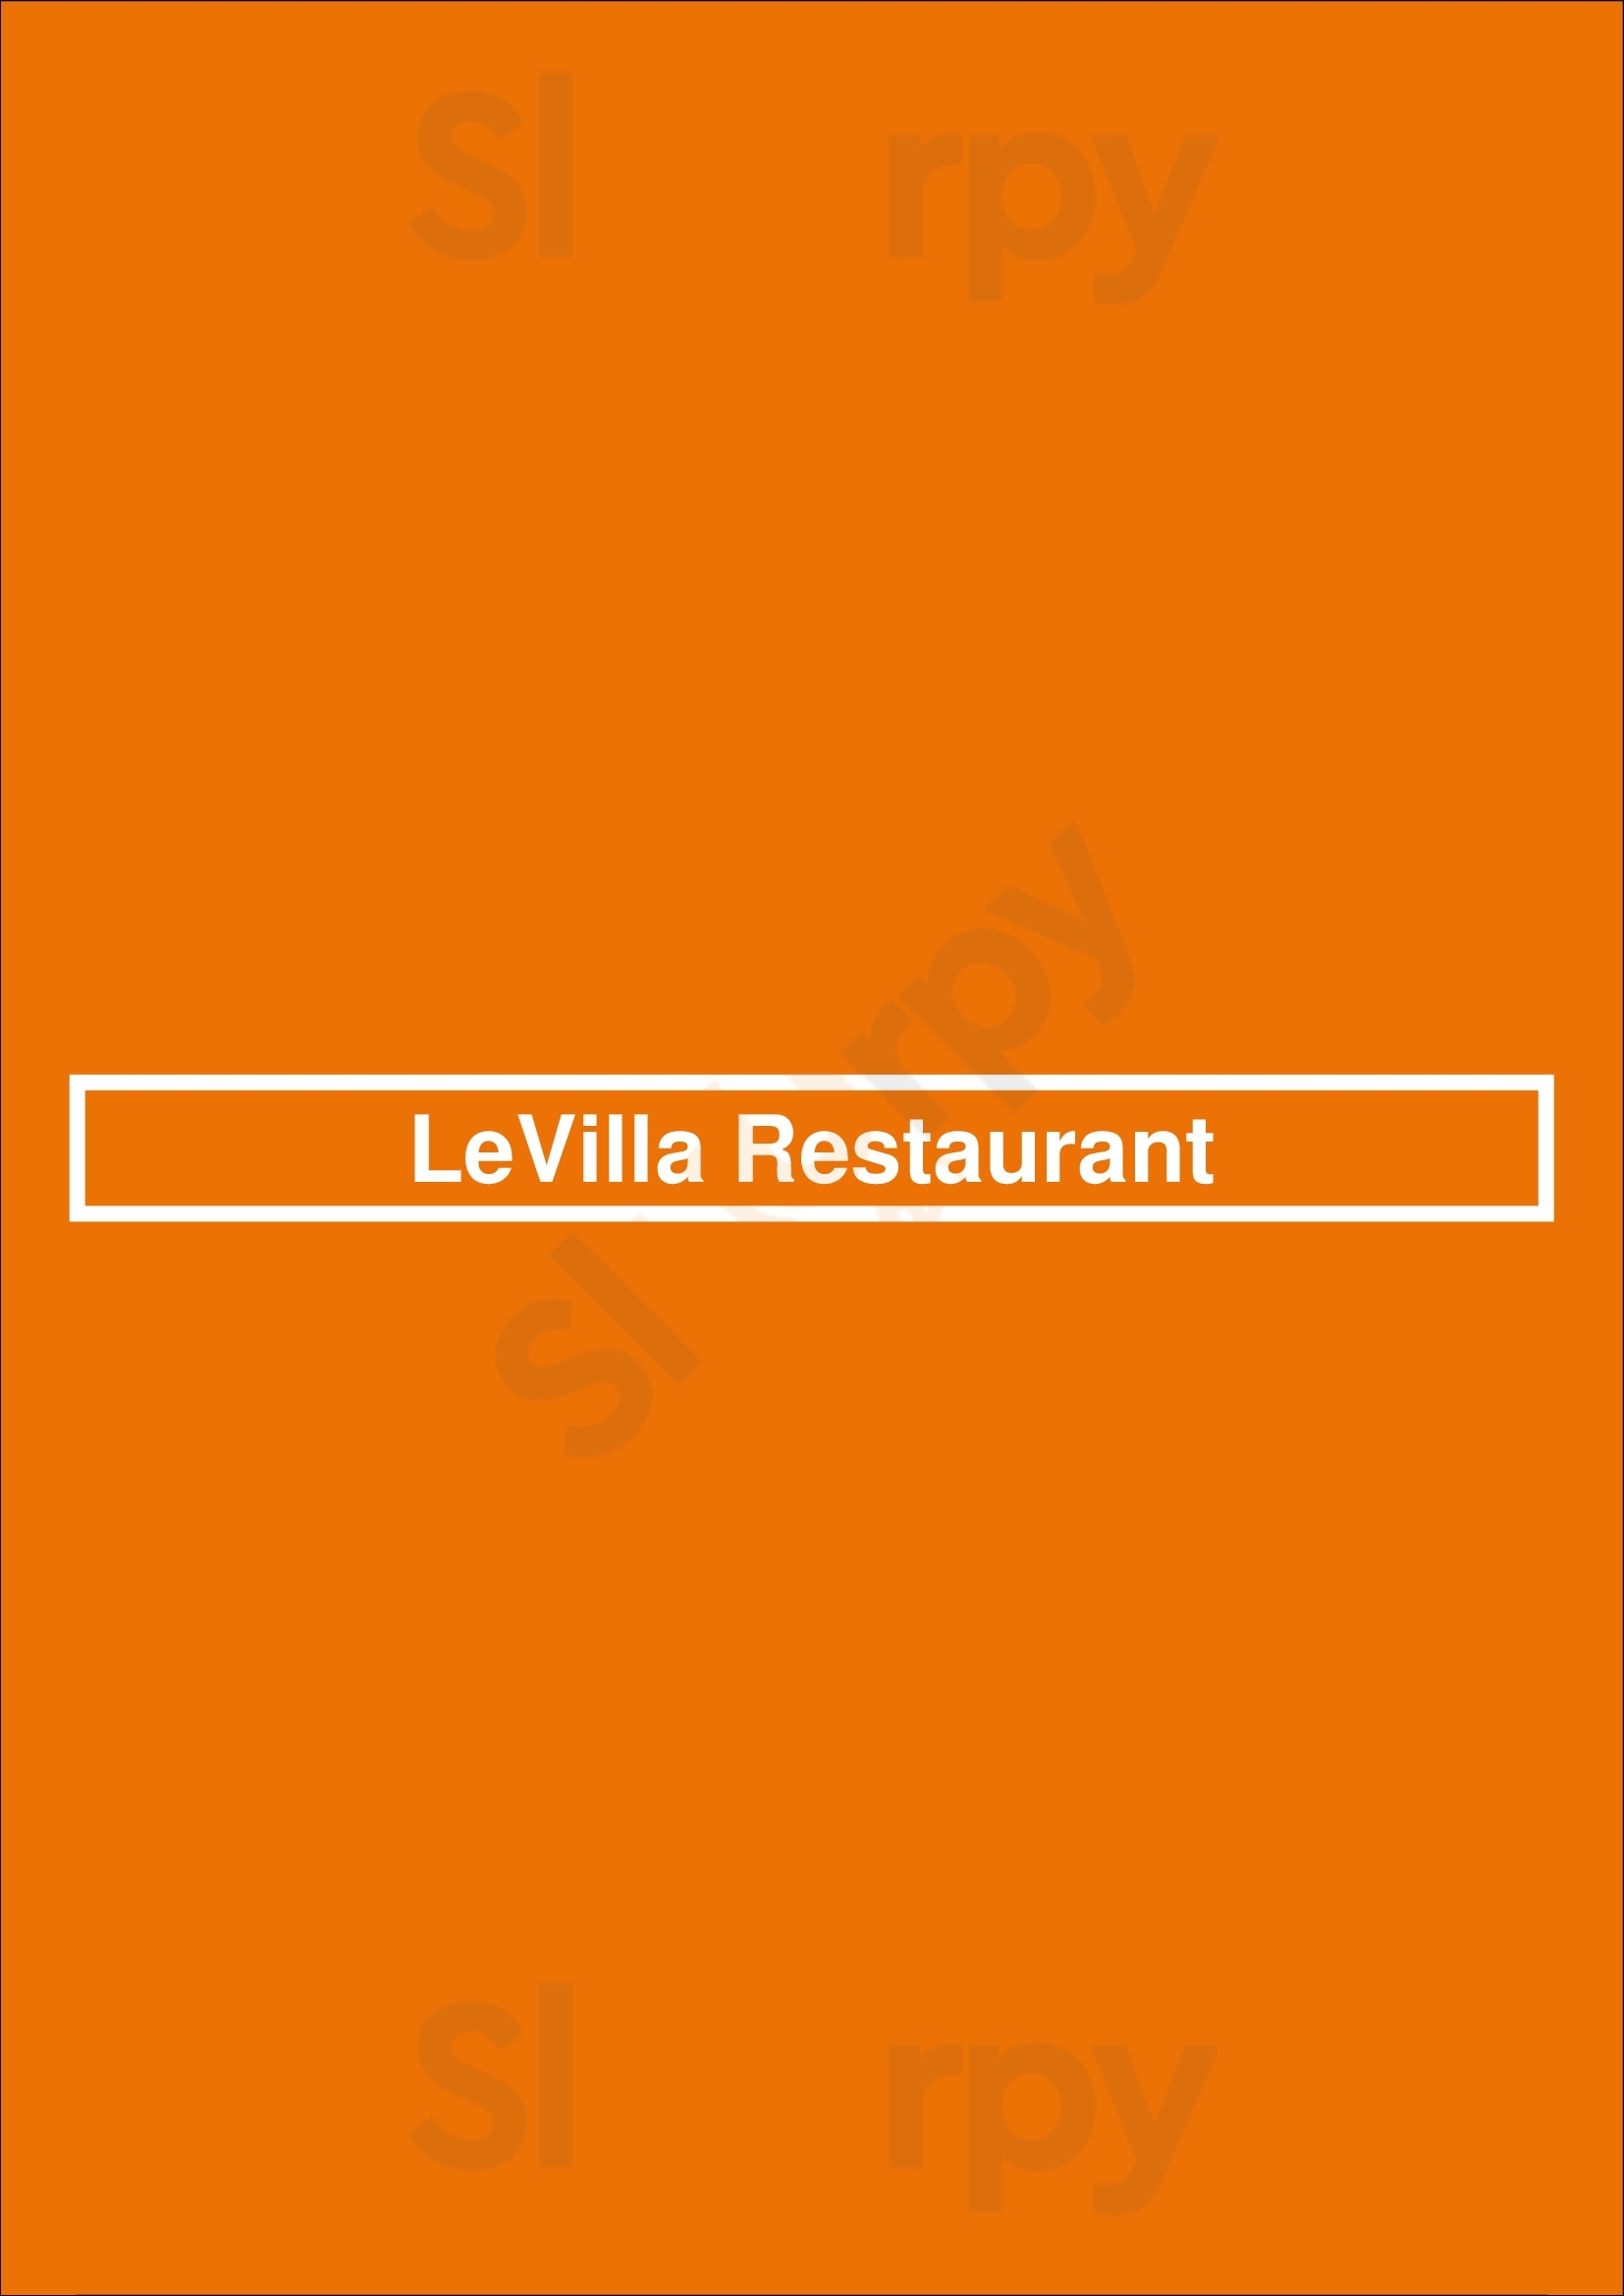 Levilla Restaurant Calgary Menu - 1